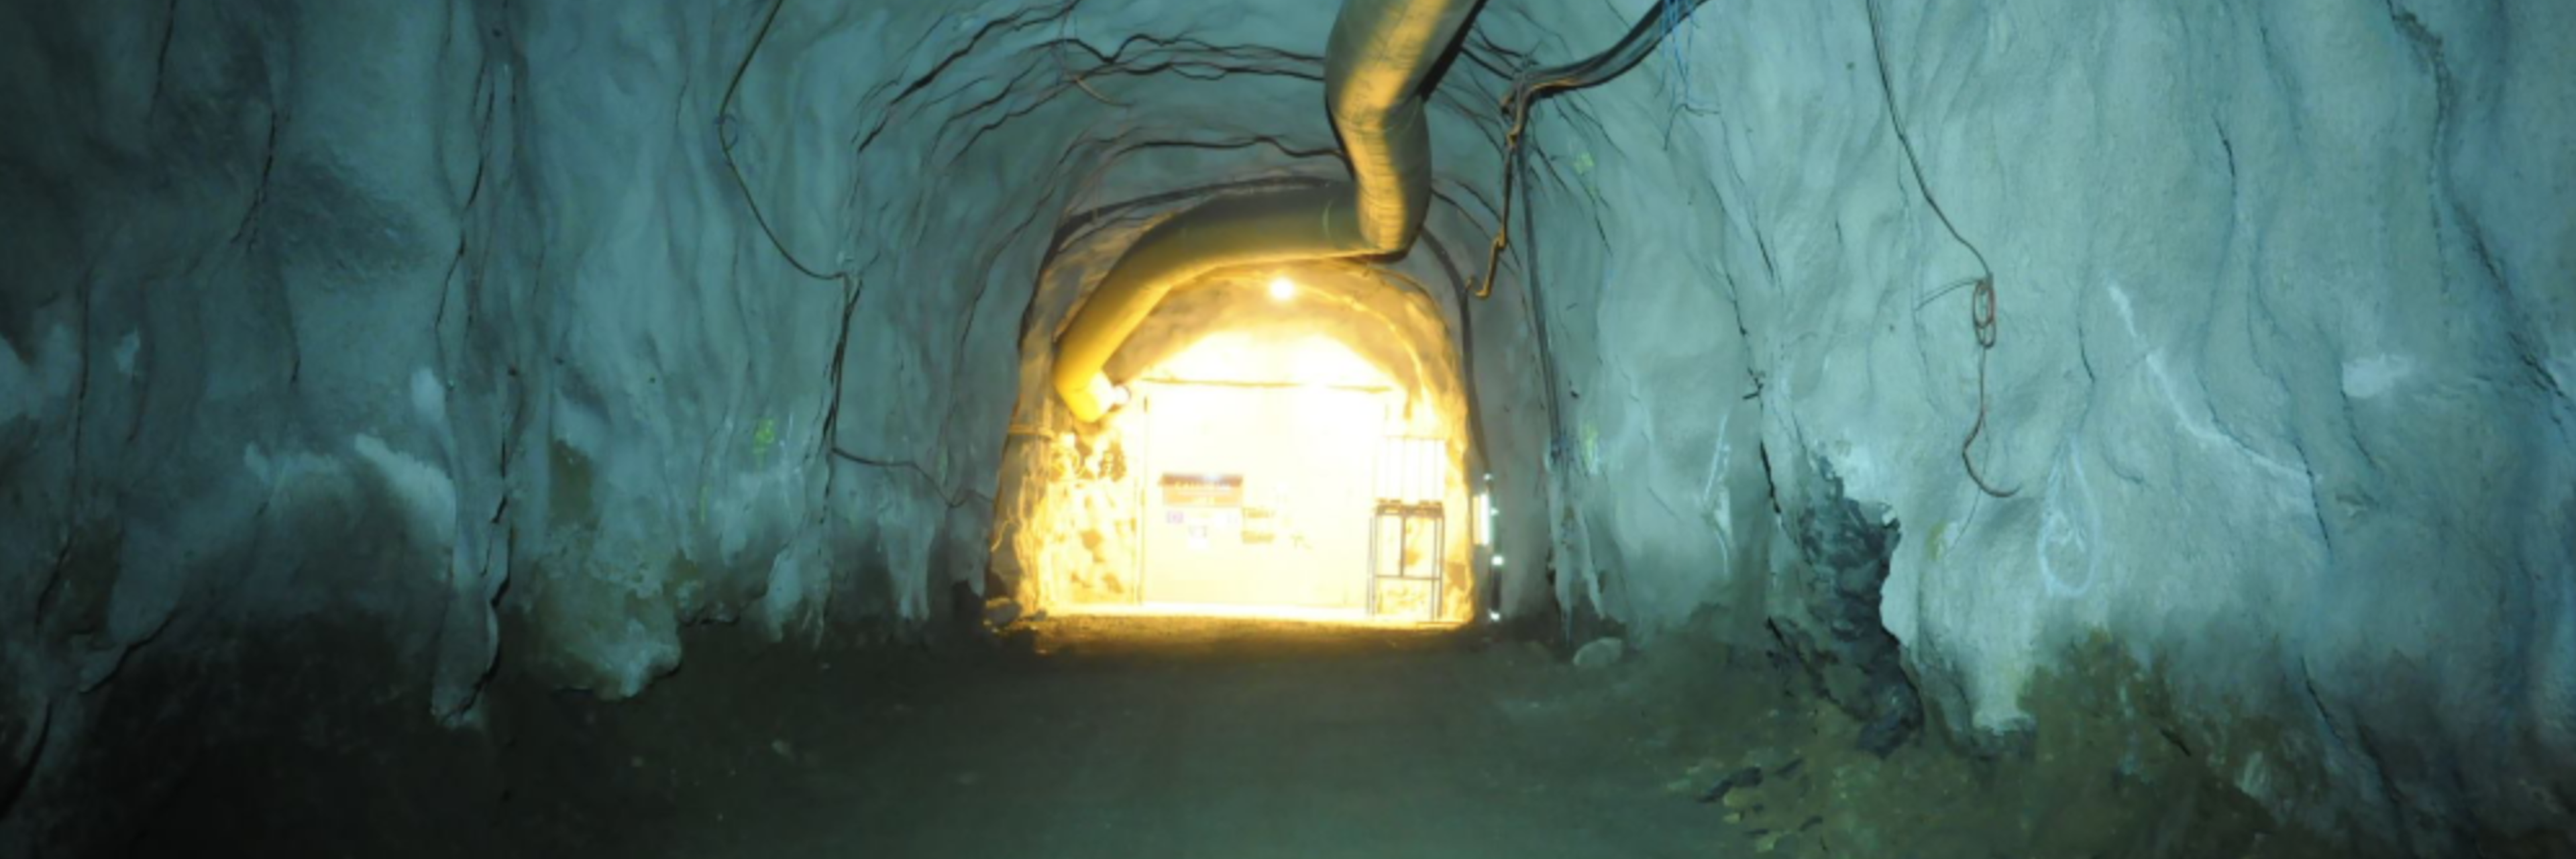 Entrance to Pyhäsalmi mine